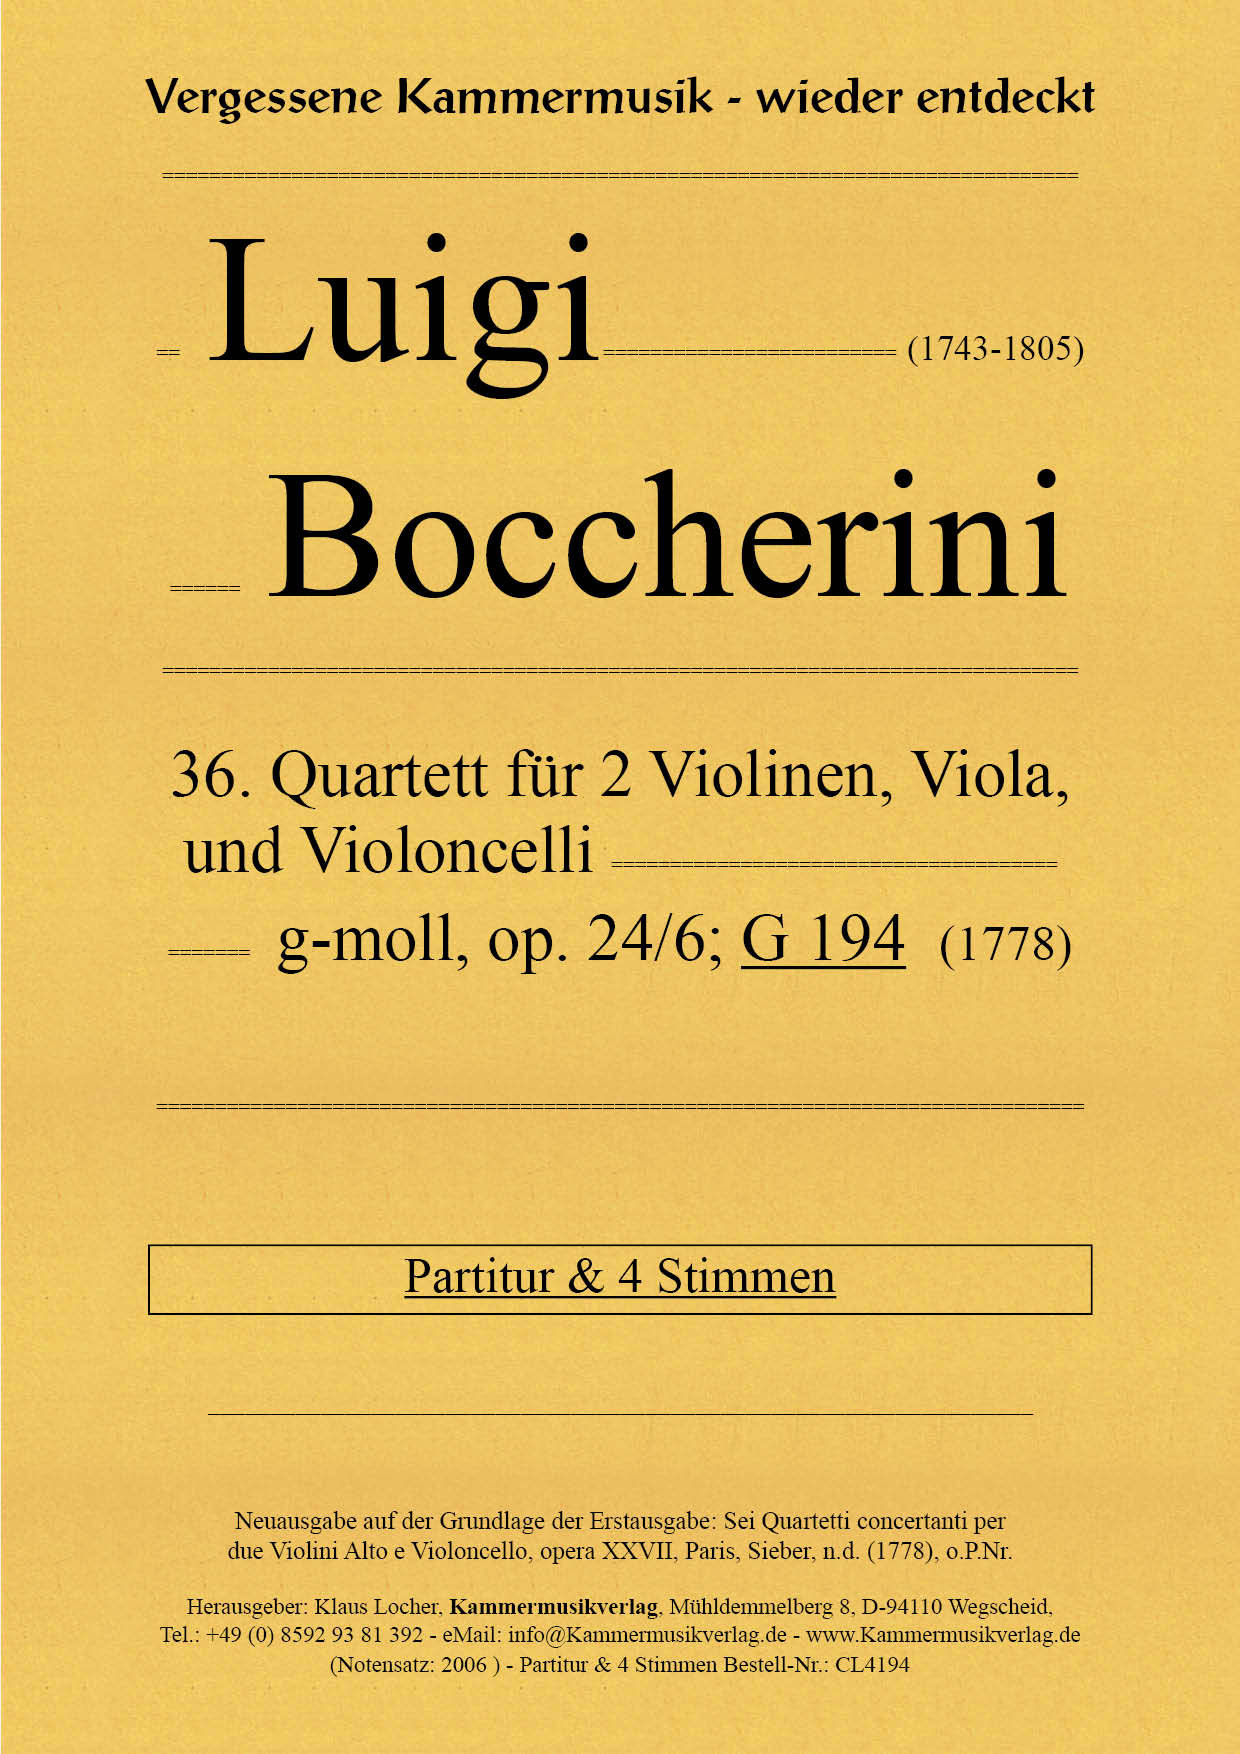 Boccherini: String Quartet in G Minor, G 194, Op. 24, No. 6